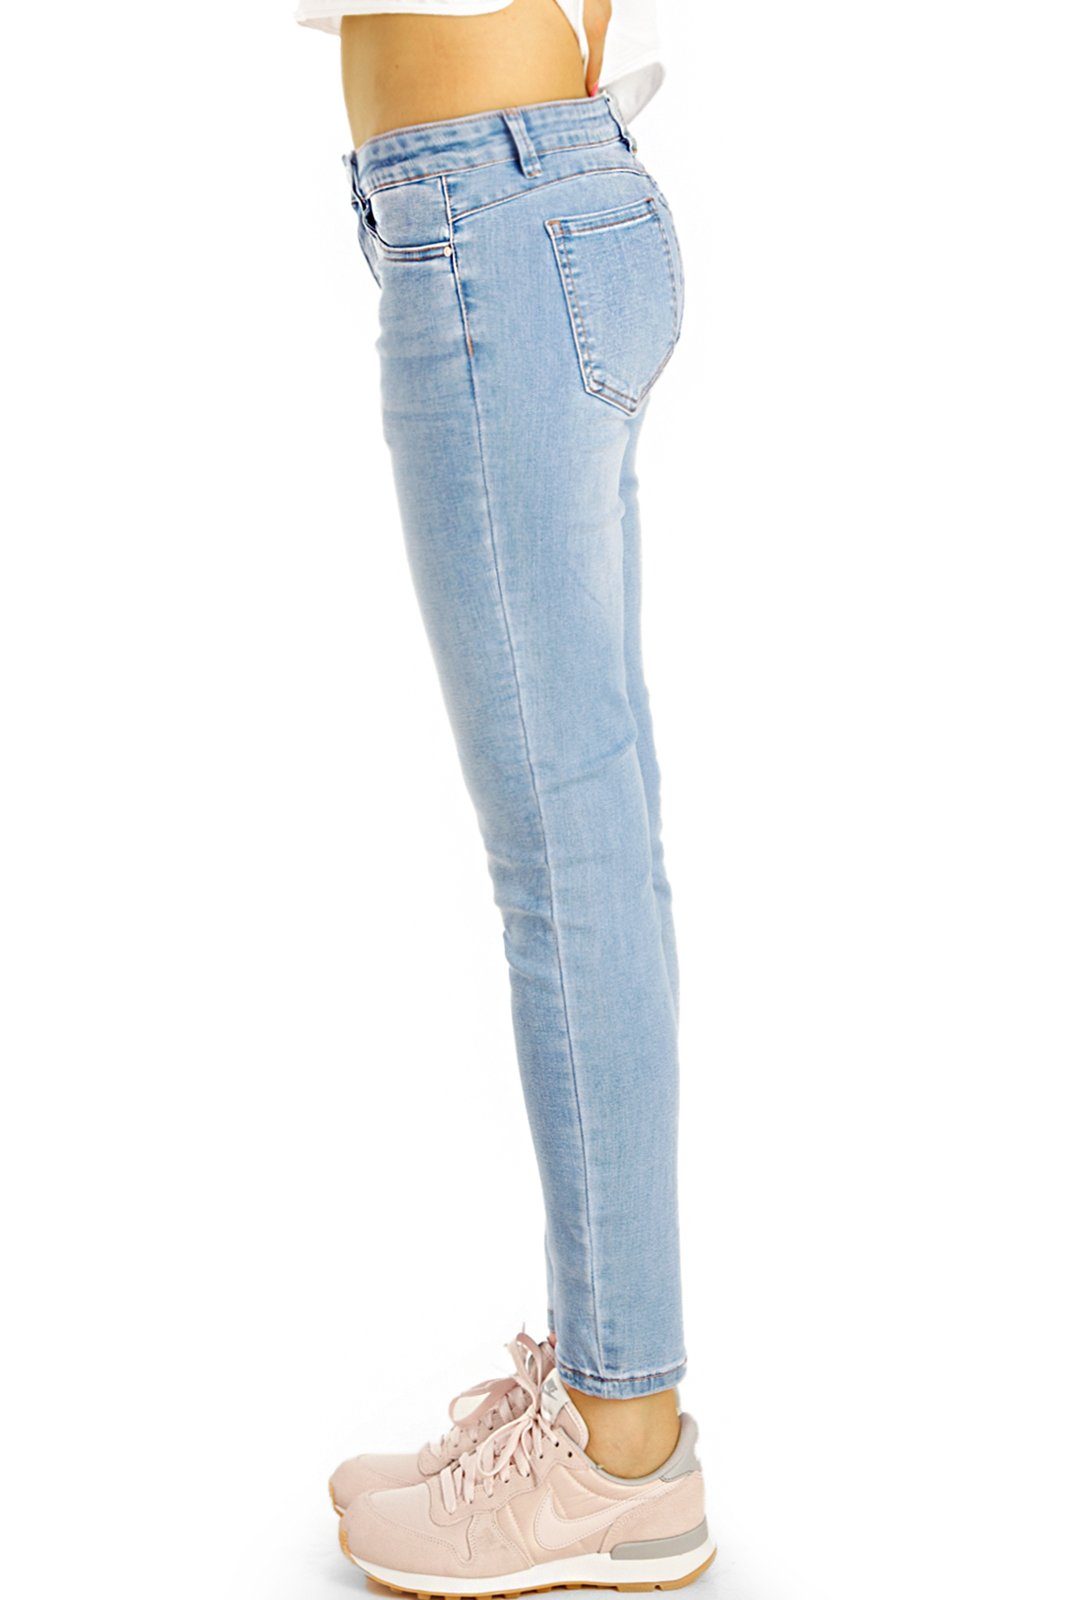 Stretch-Anteil, Skinny Low-rise-Jeans mit Hose Hüftjeans be styled Röhrenjeans - dunkelblau Damen- j27p-1 slim 5-Pocket-Style Stretch -